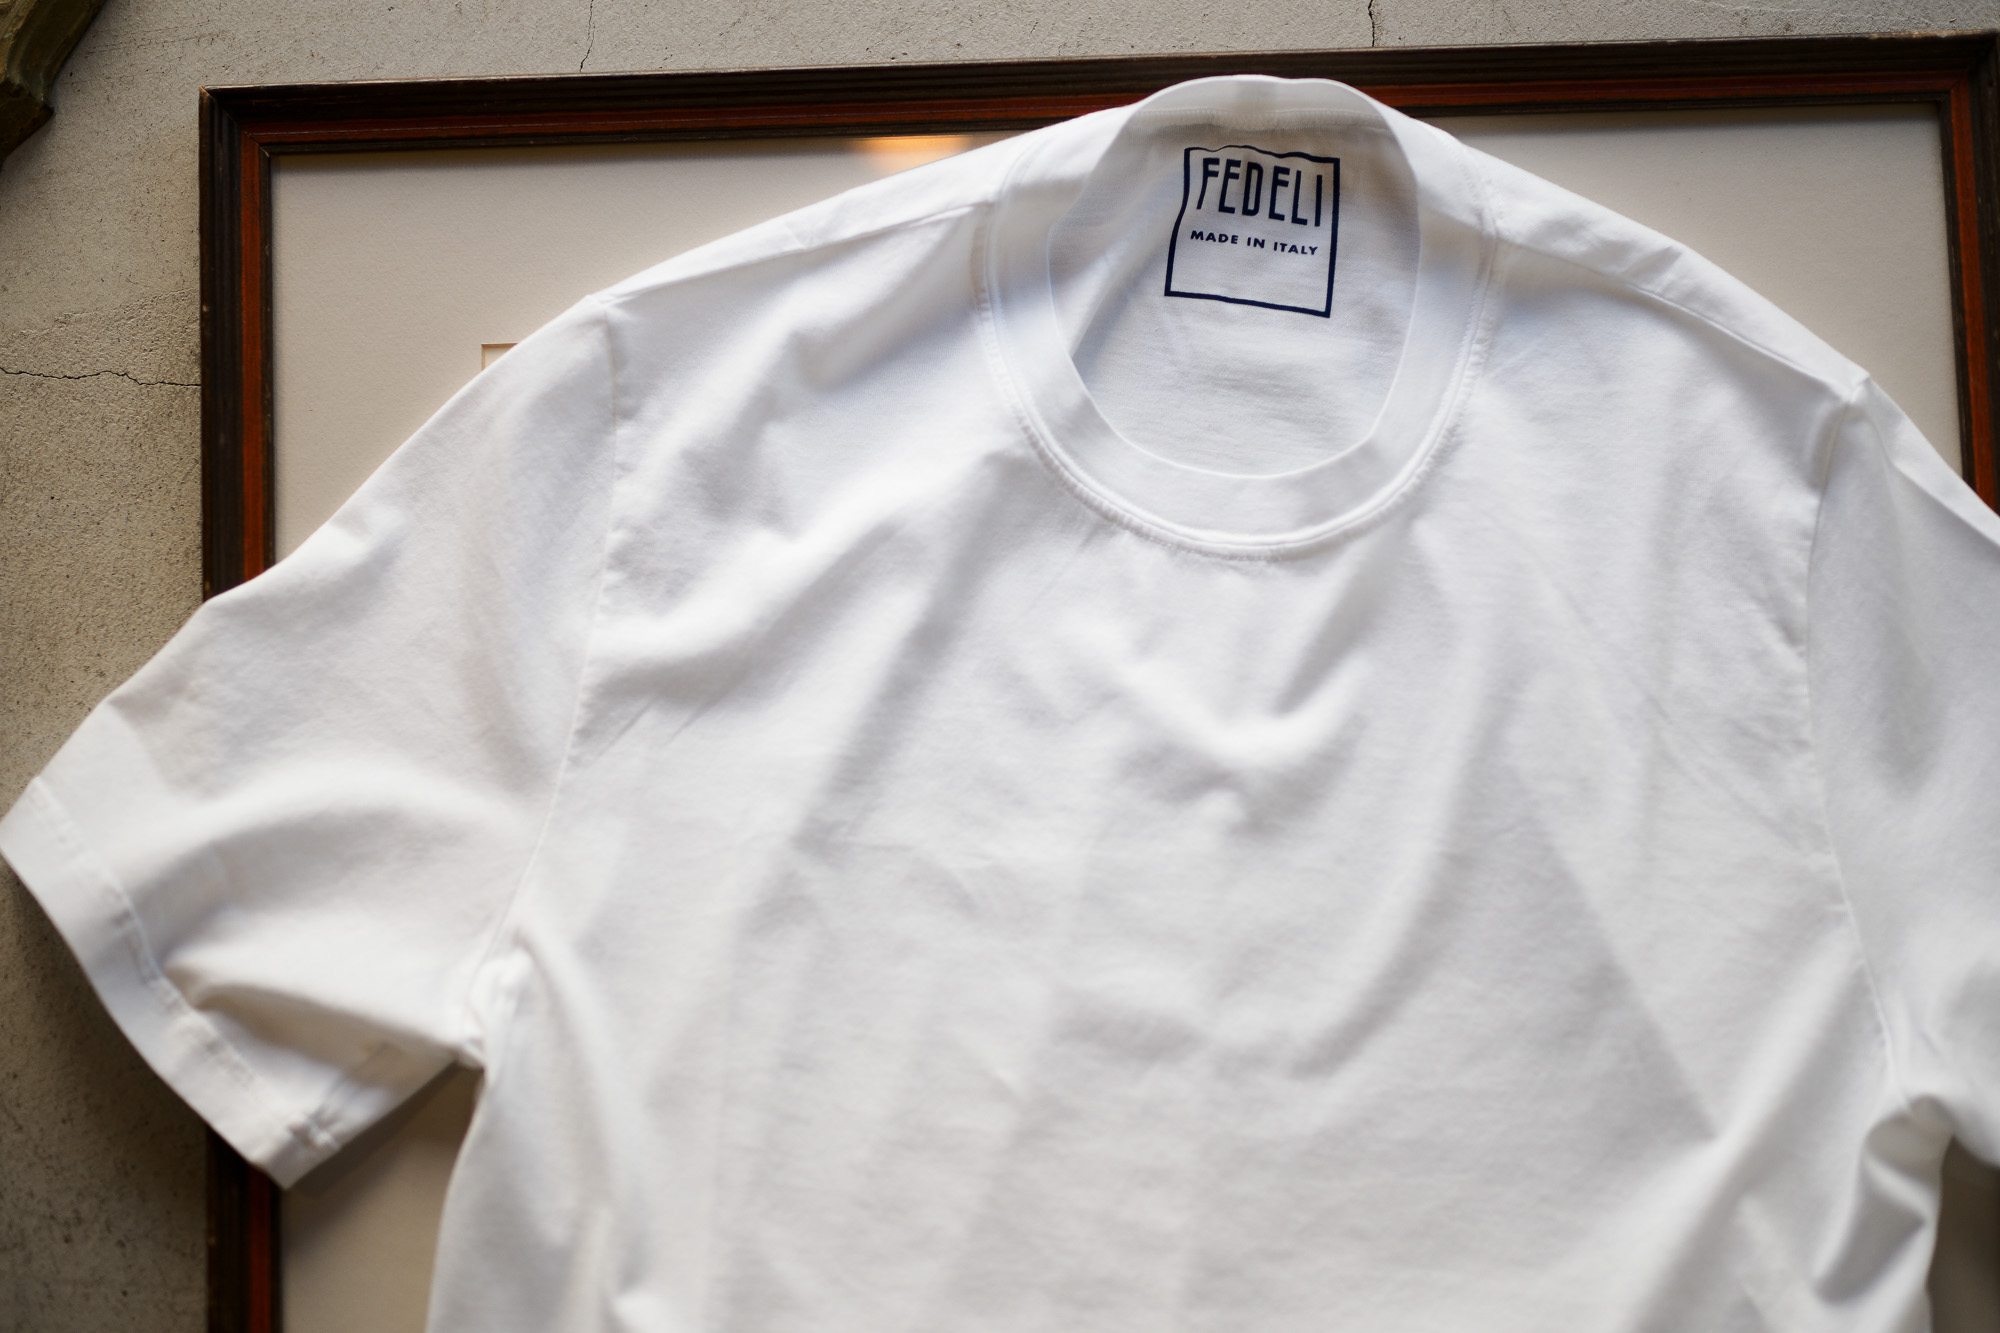 FEDELI(フェデーリ) Crew Neck T-shirt (クルーネック Tシャツ) ギザコットン Tシャツ WHITE (ホワイト・41) made in italy (イタリア製) 2020 春夏 【ご予約受付中】愛知 名古屋 altoediritto アルトエデリット TEE